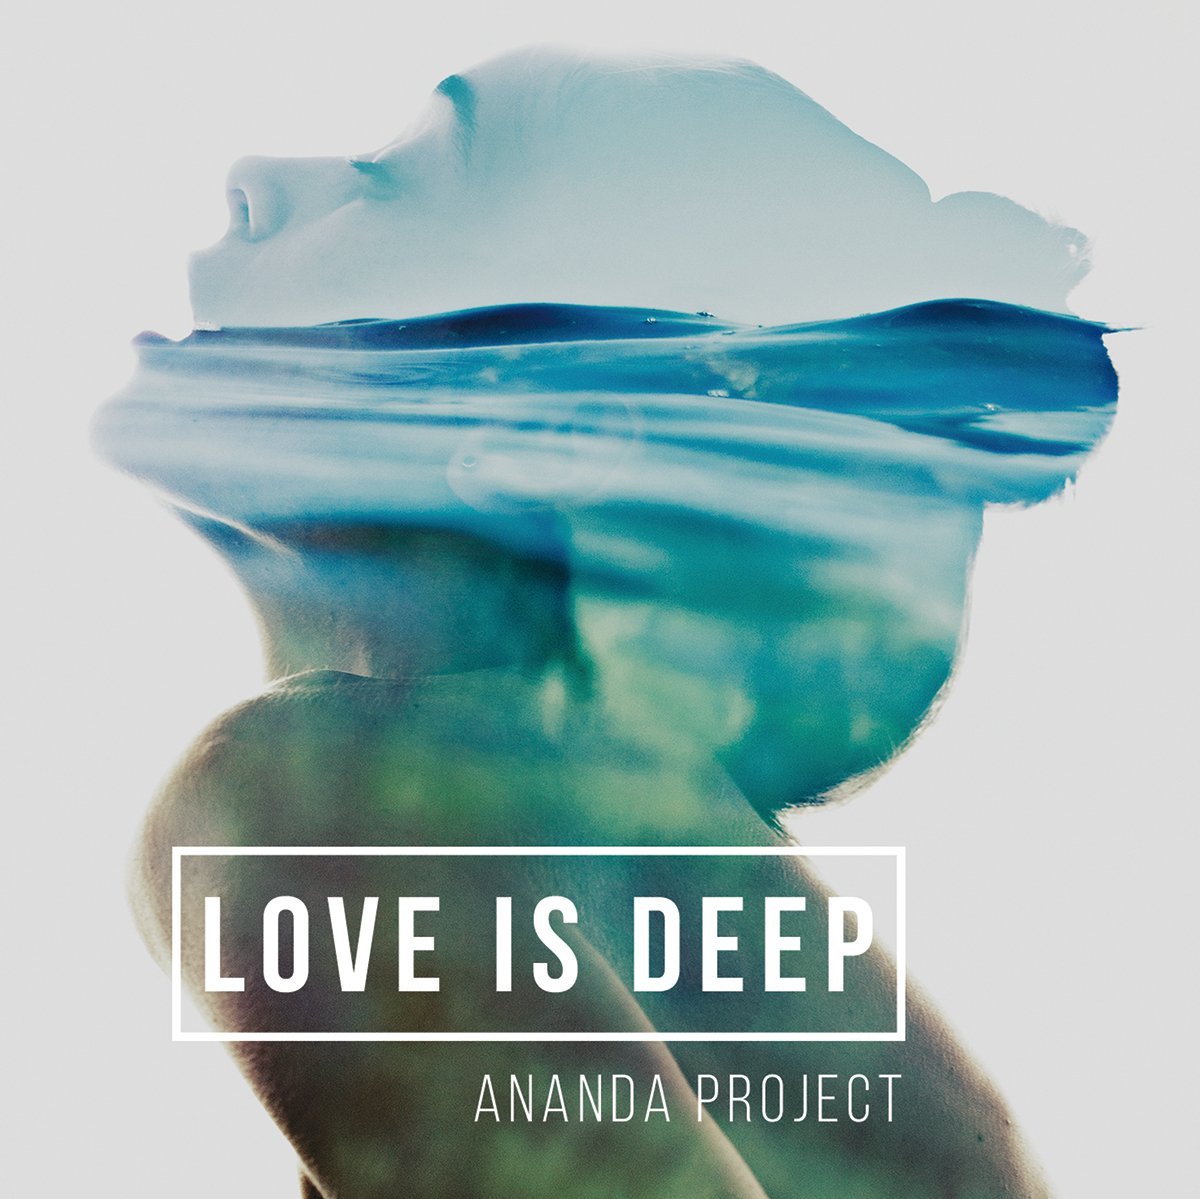 Ananda Project - Love Is Deep